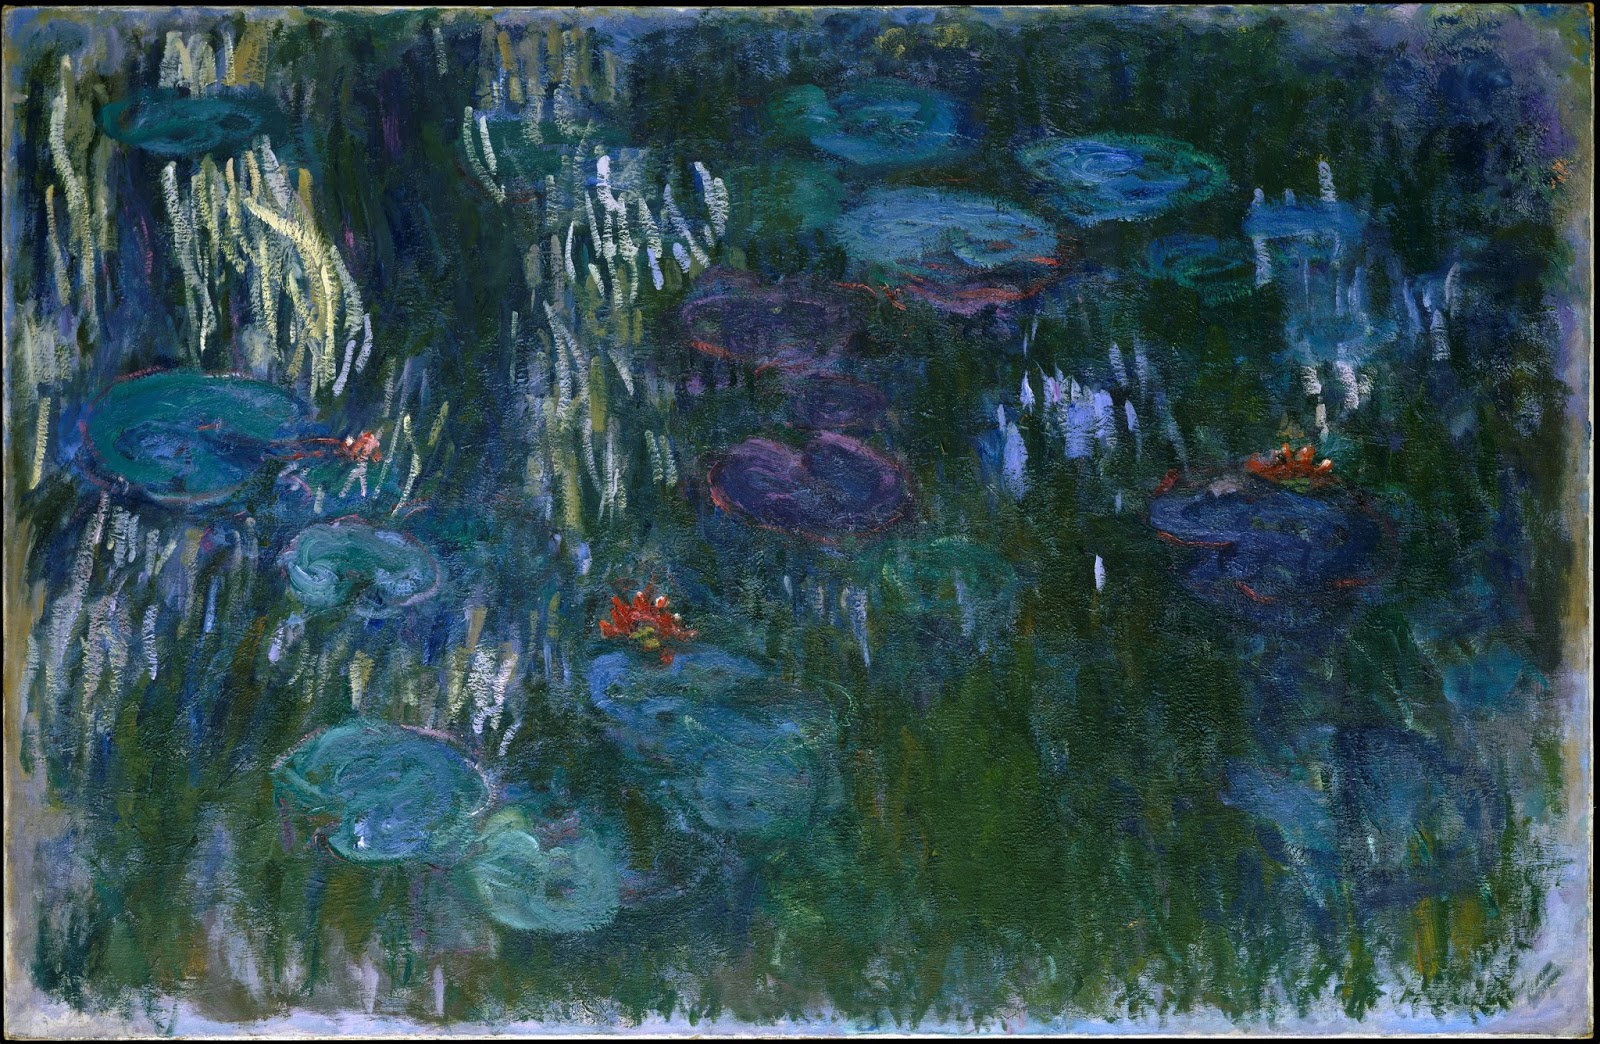 Claude+Monet-1840-1926 (997).jpg